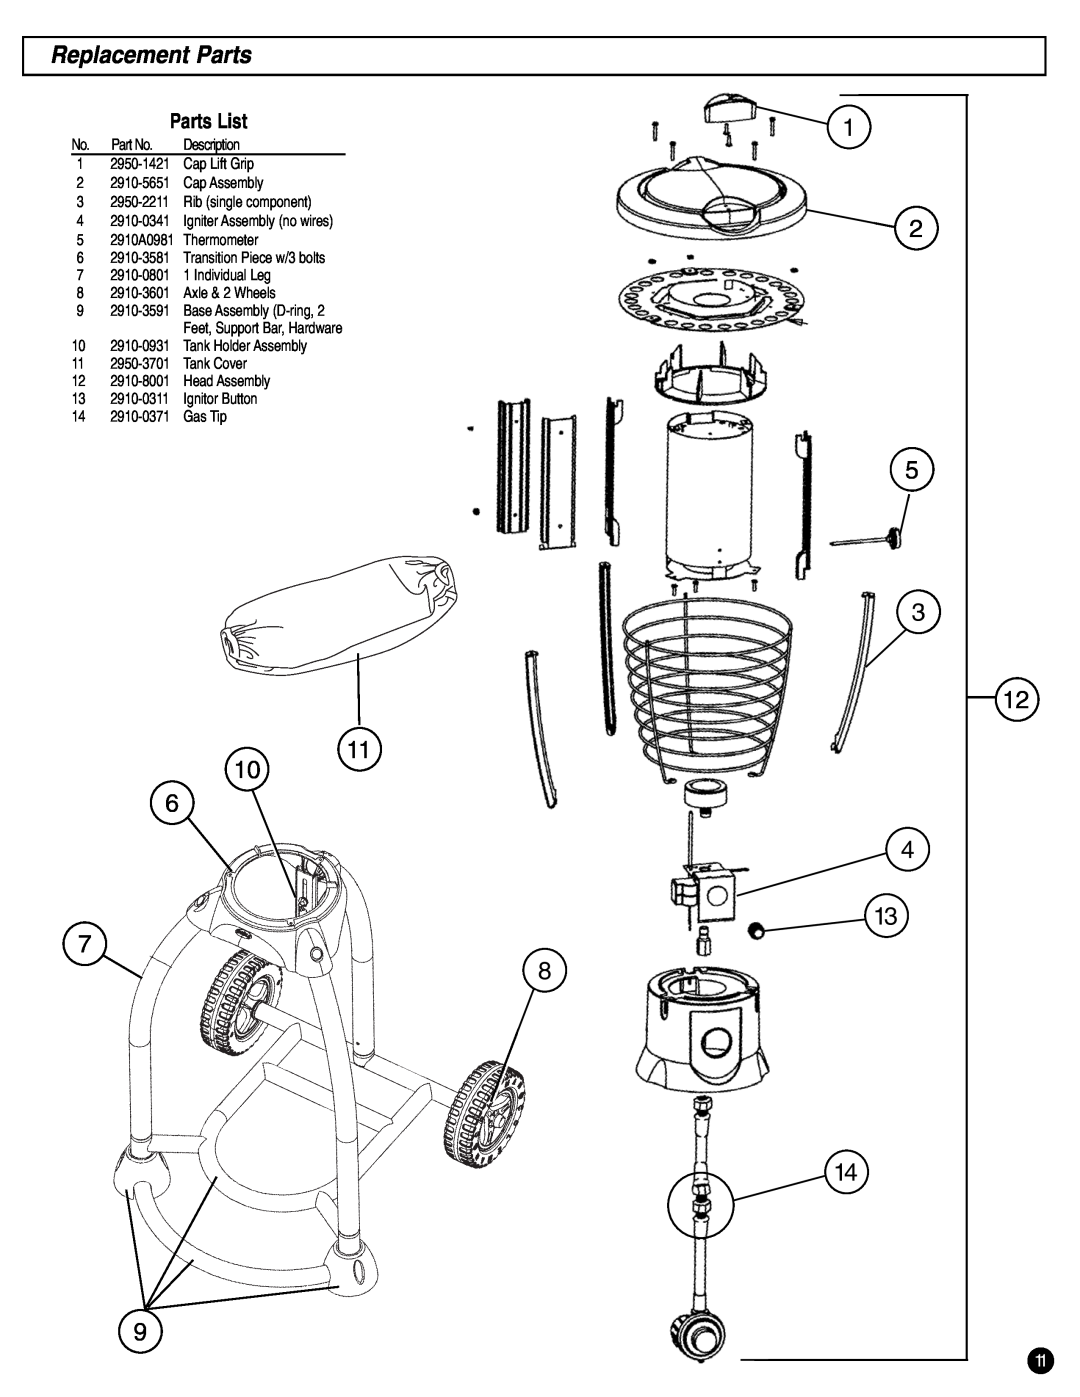 Coleman 8fa3 manual Replacement Parts, Parts List 